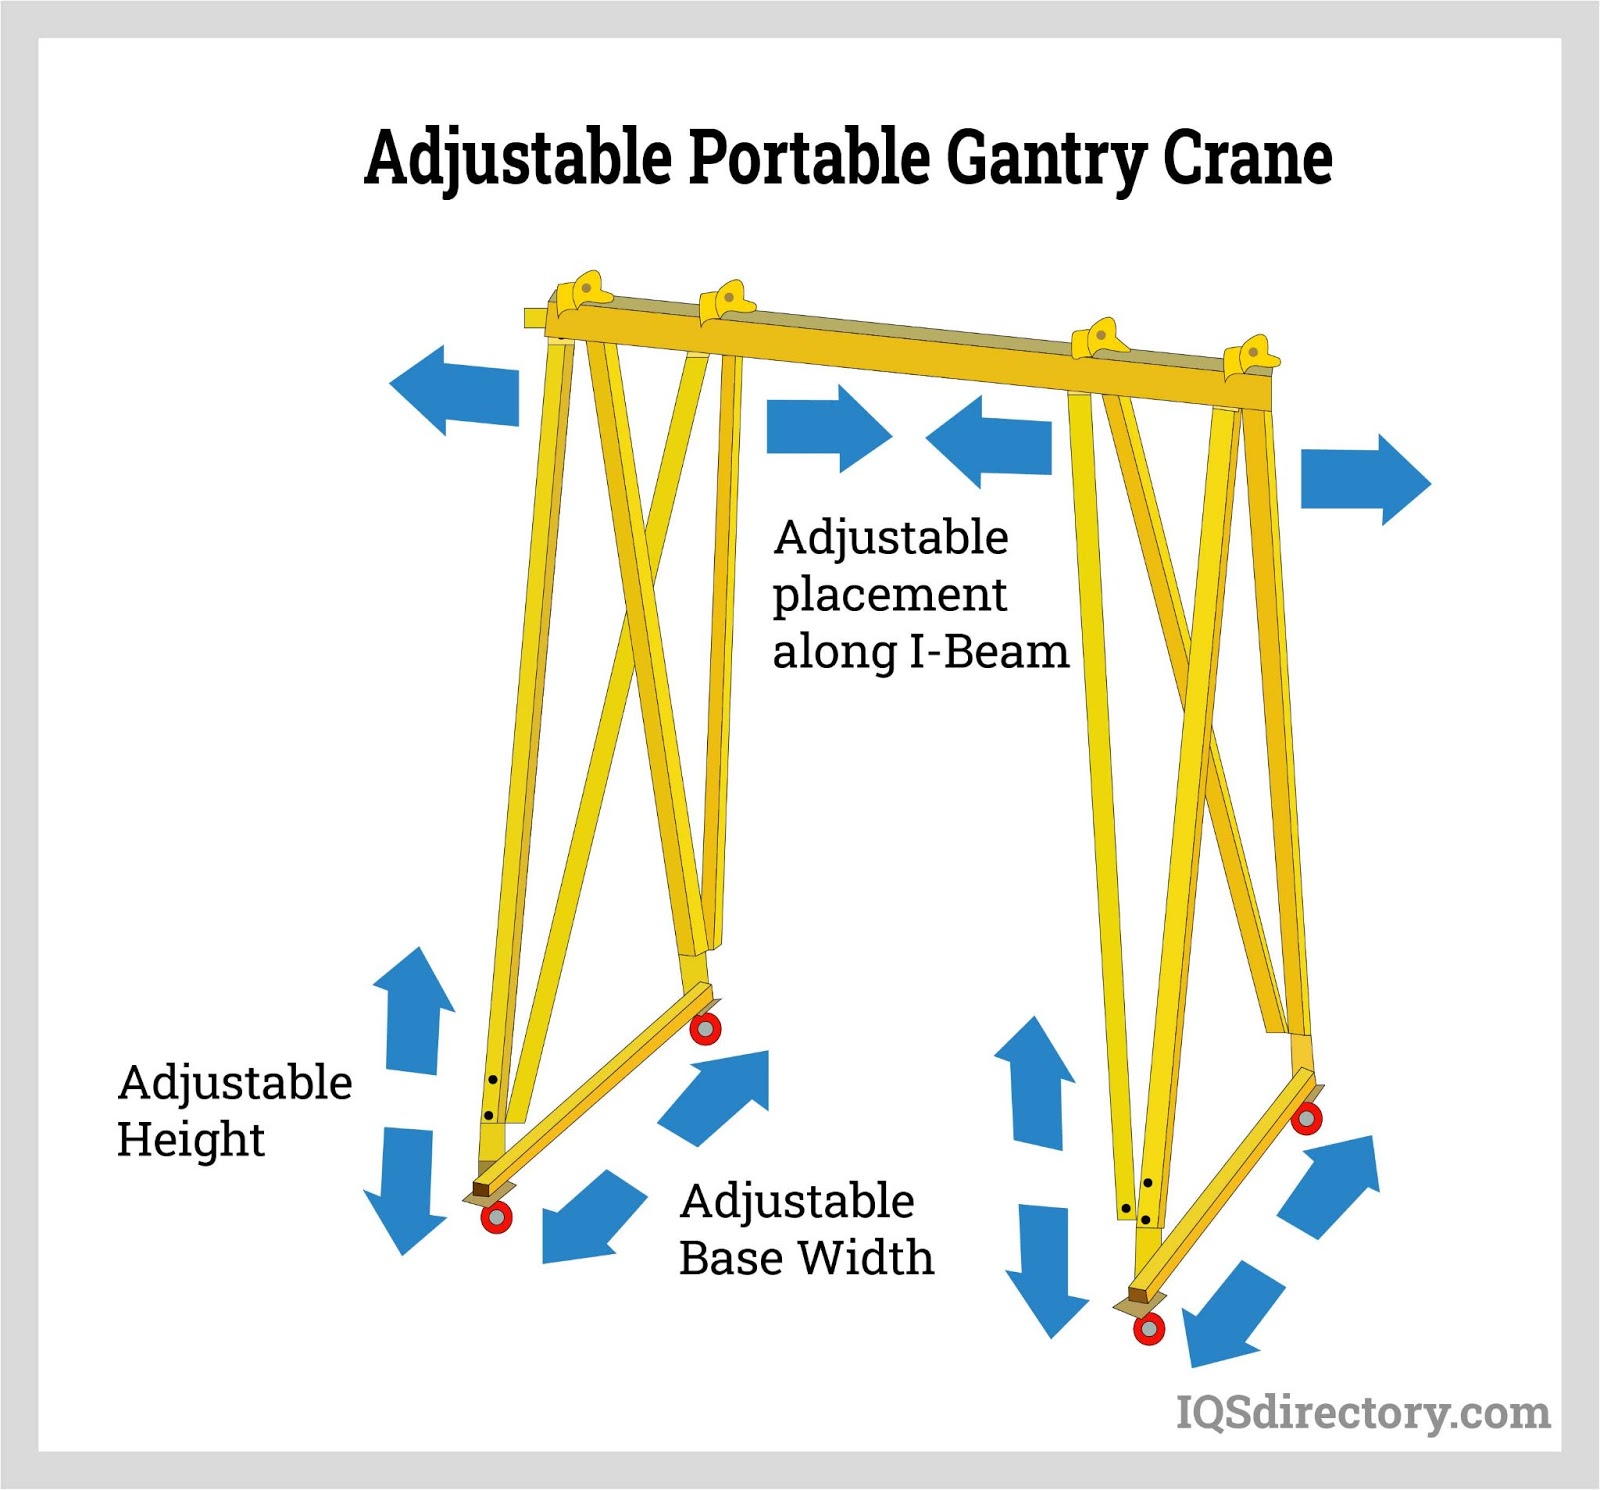 Adjustable Portable Gantry Crane